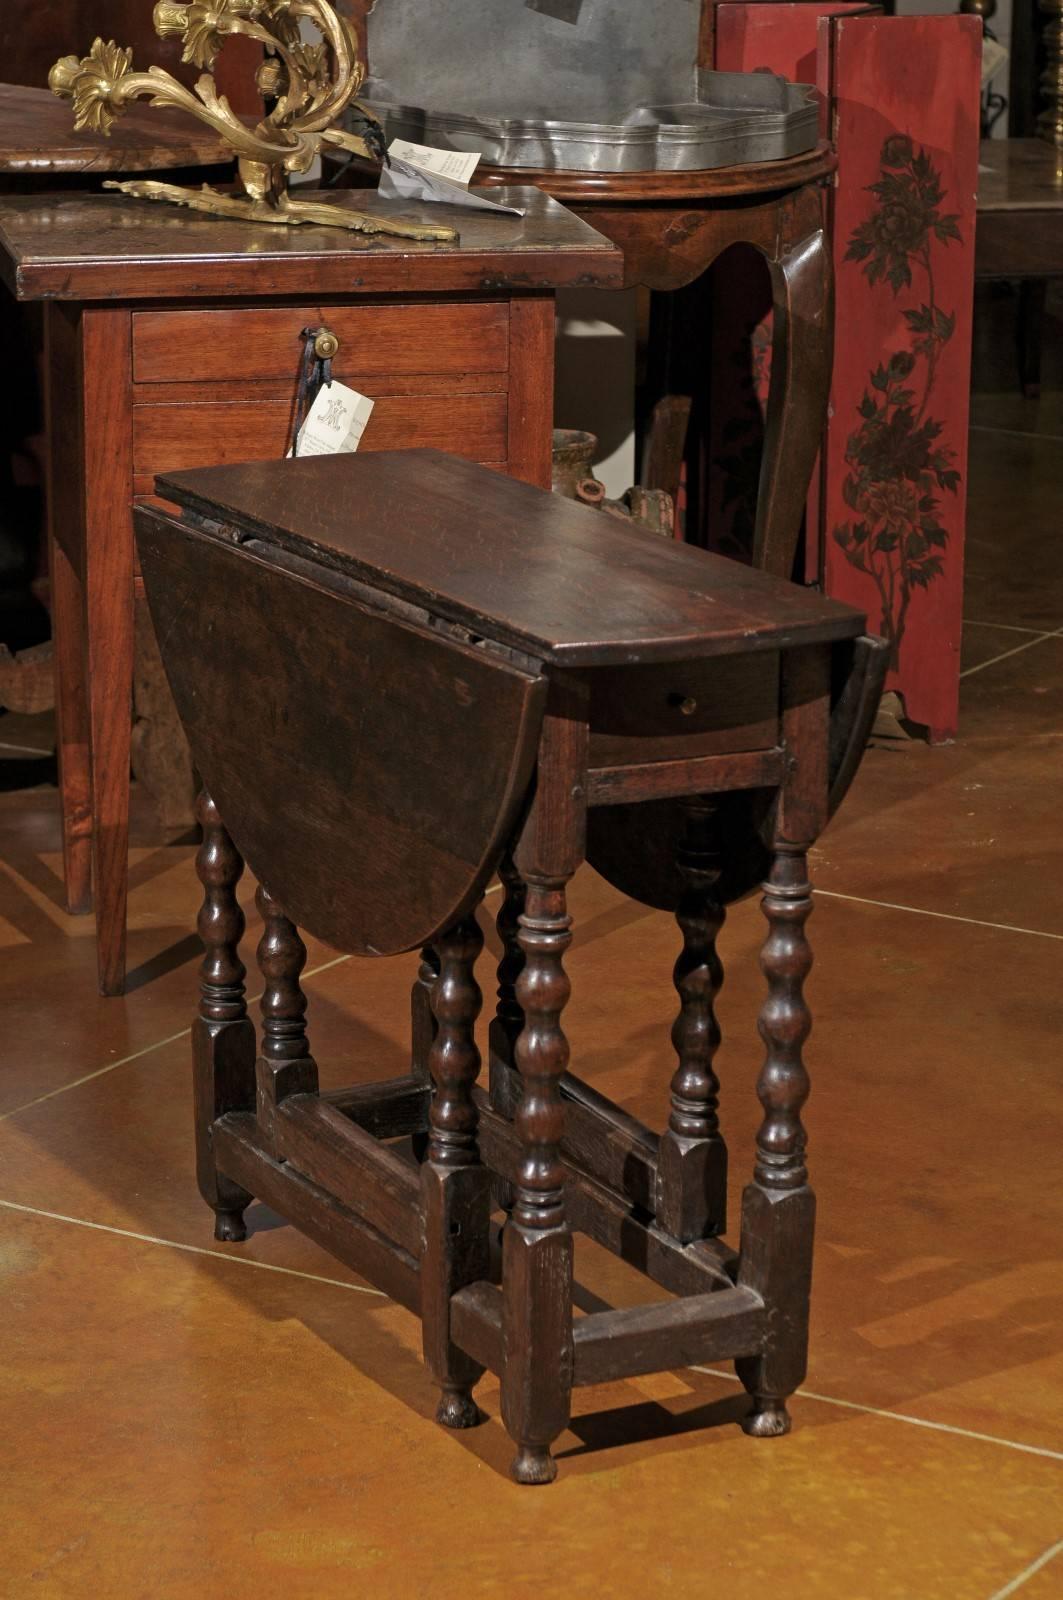 A 19th century English oak gate leg drop-leaf table with bobbin turned legs, stretcher and round feet.